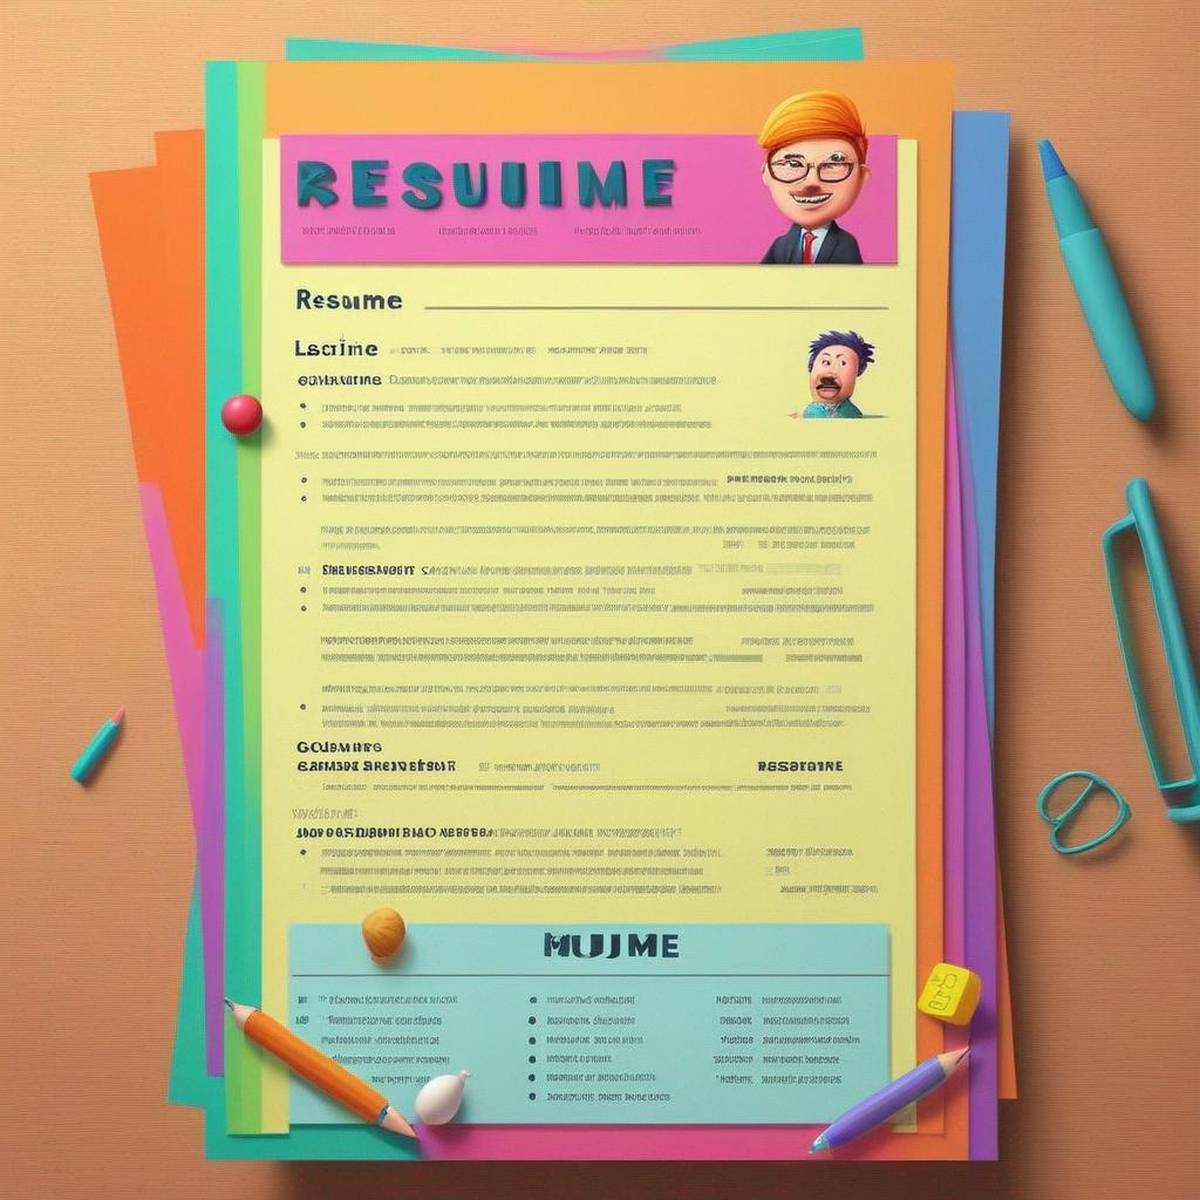 Resume puns